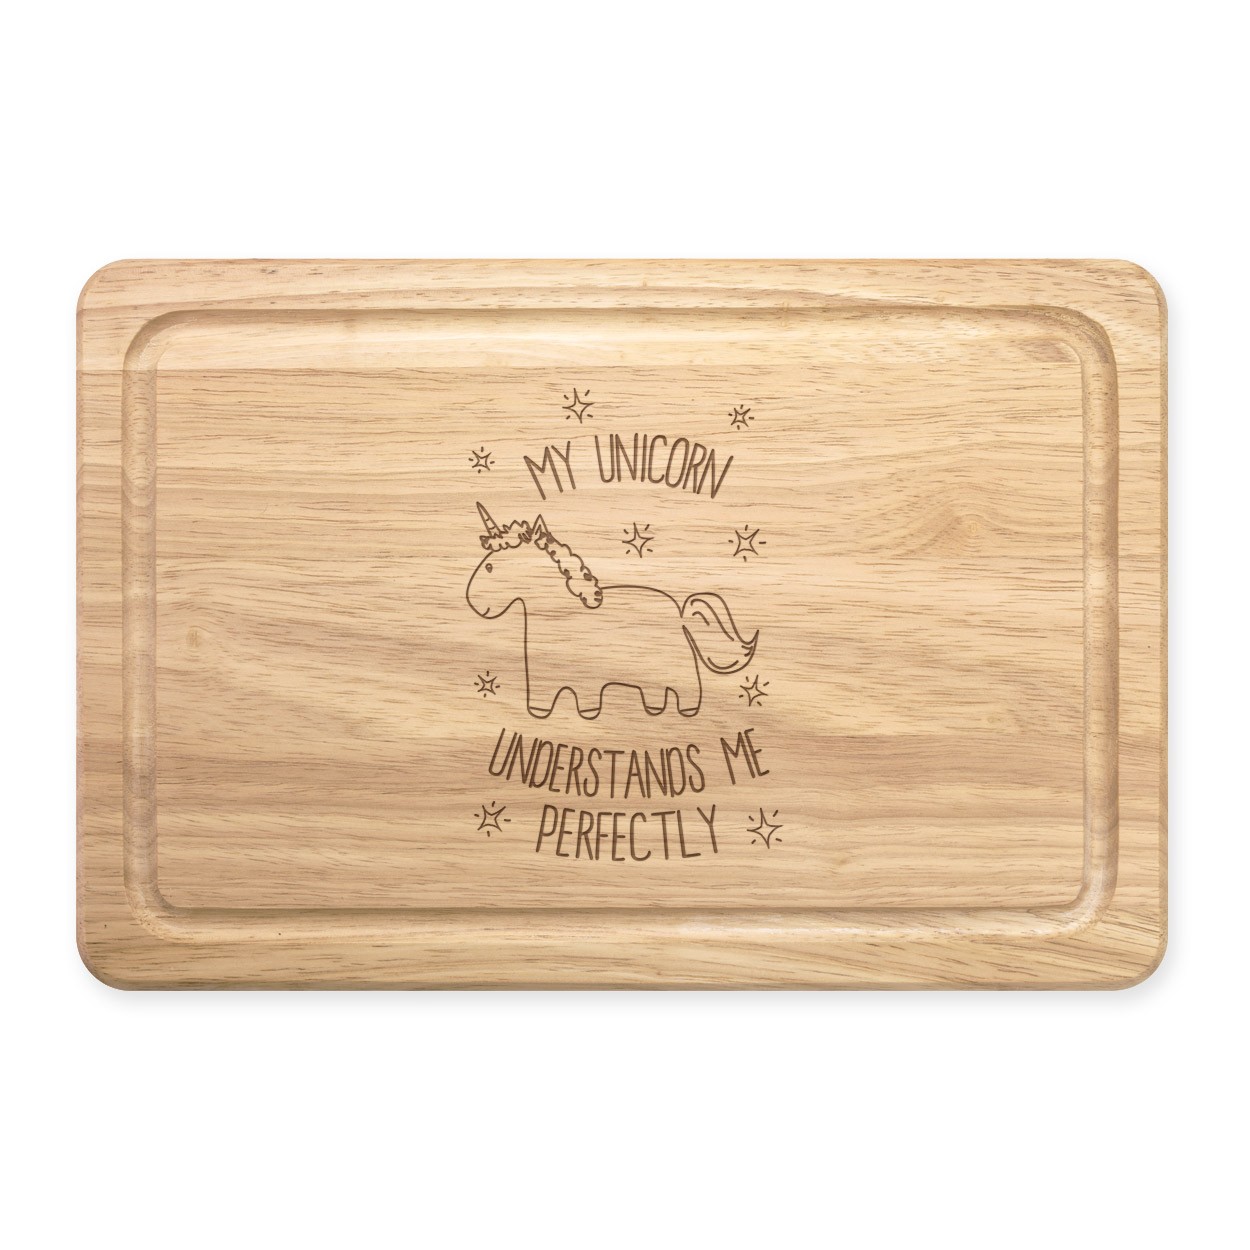 Lila My Unicorn Understands Me Rectangular Wooden Chopping Board